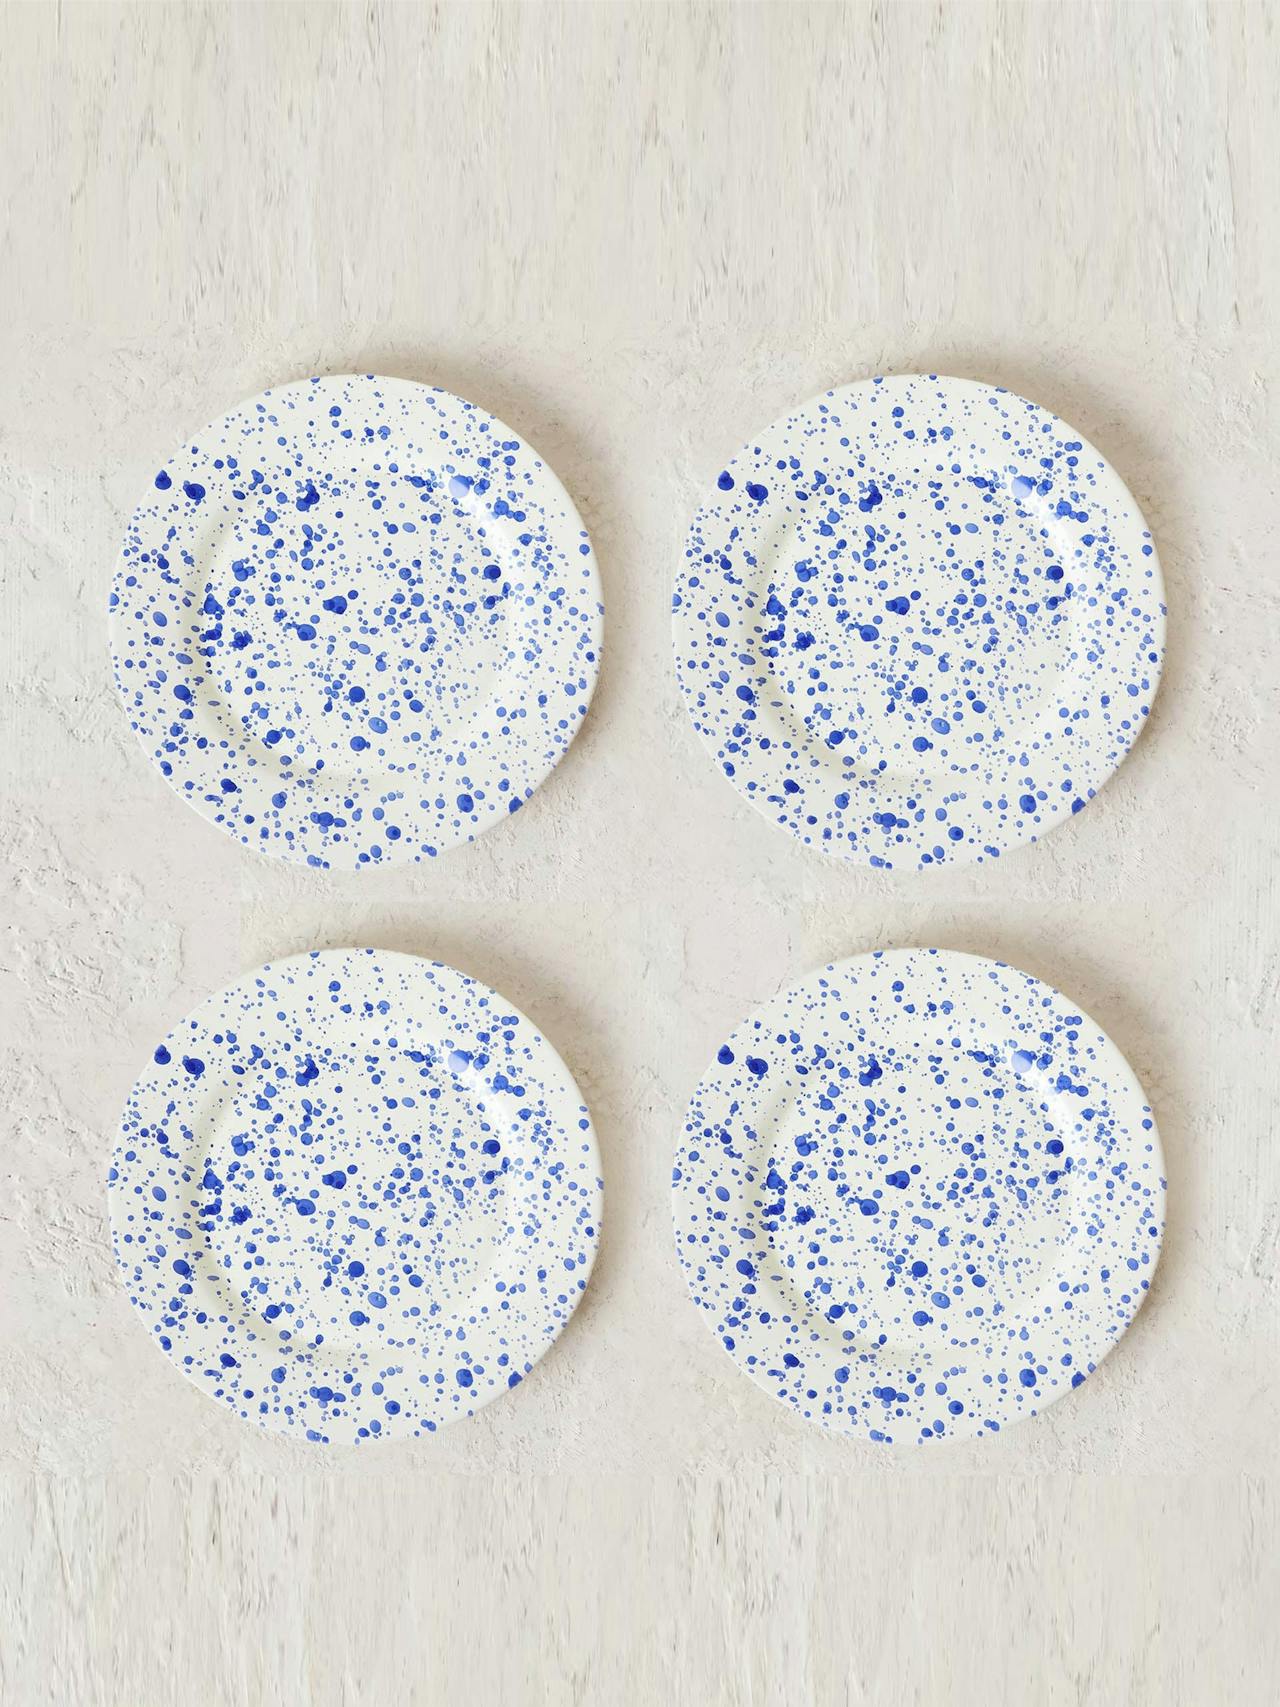 Blueberry plates, set of 4